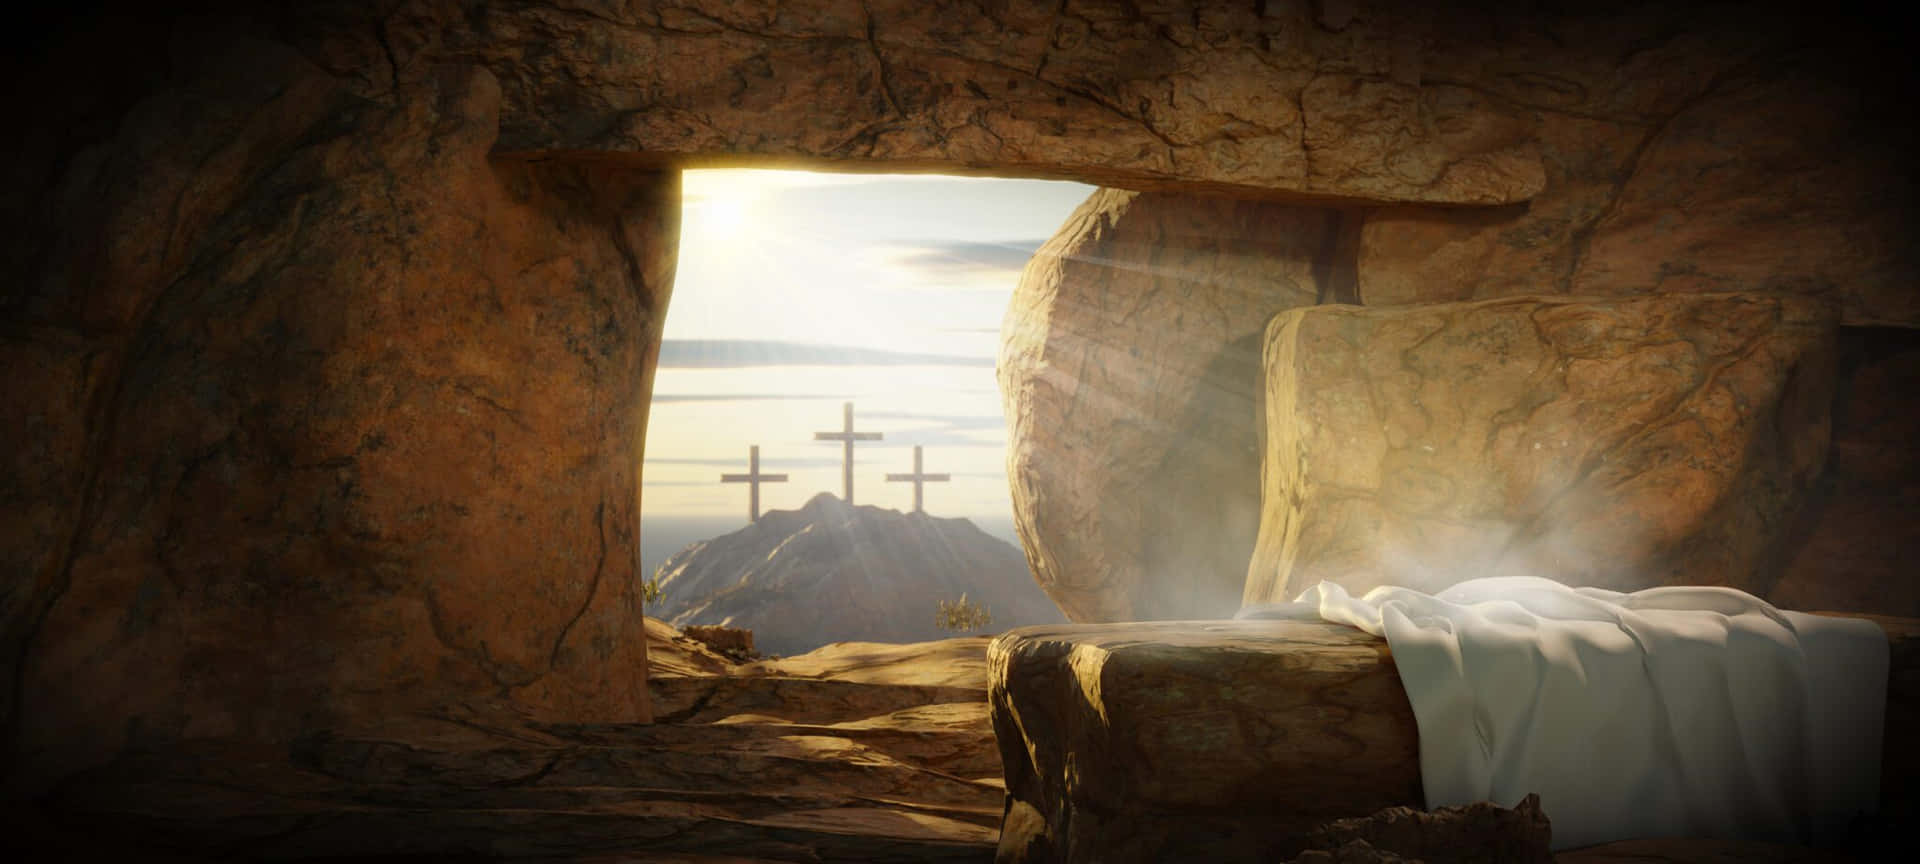 Empty Jesus Tomb With Cross Picture